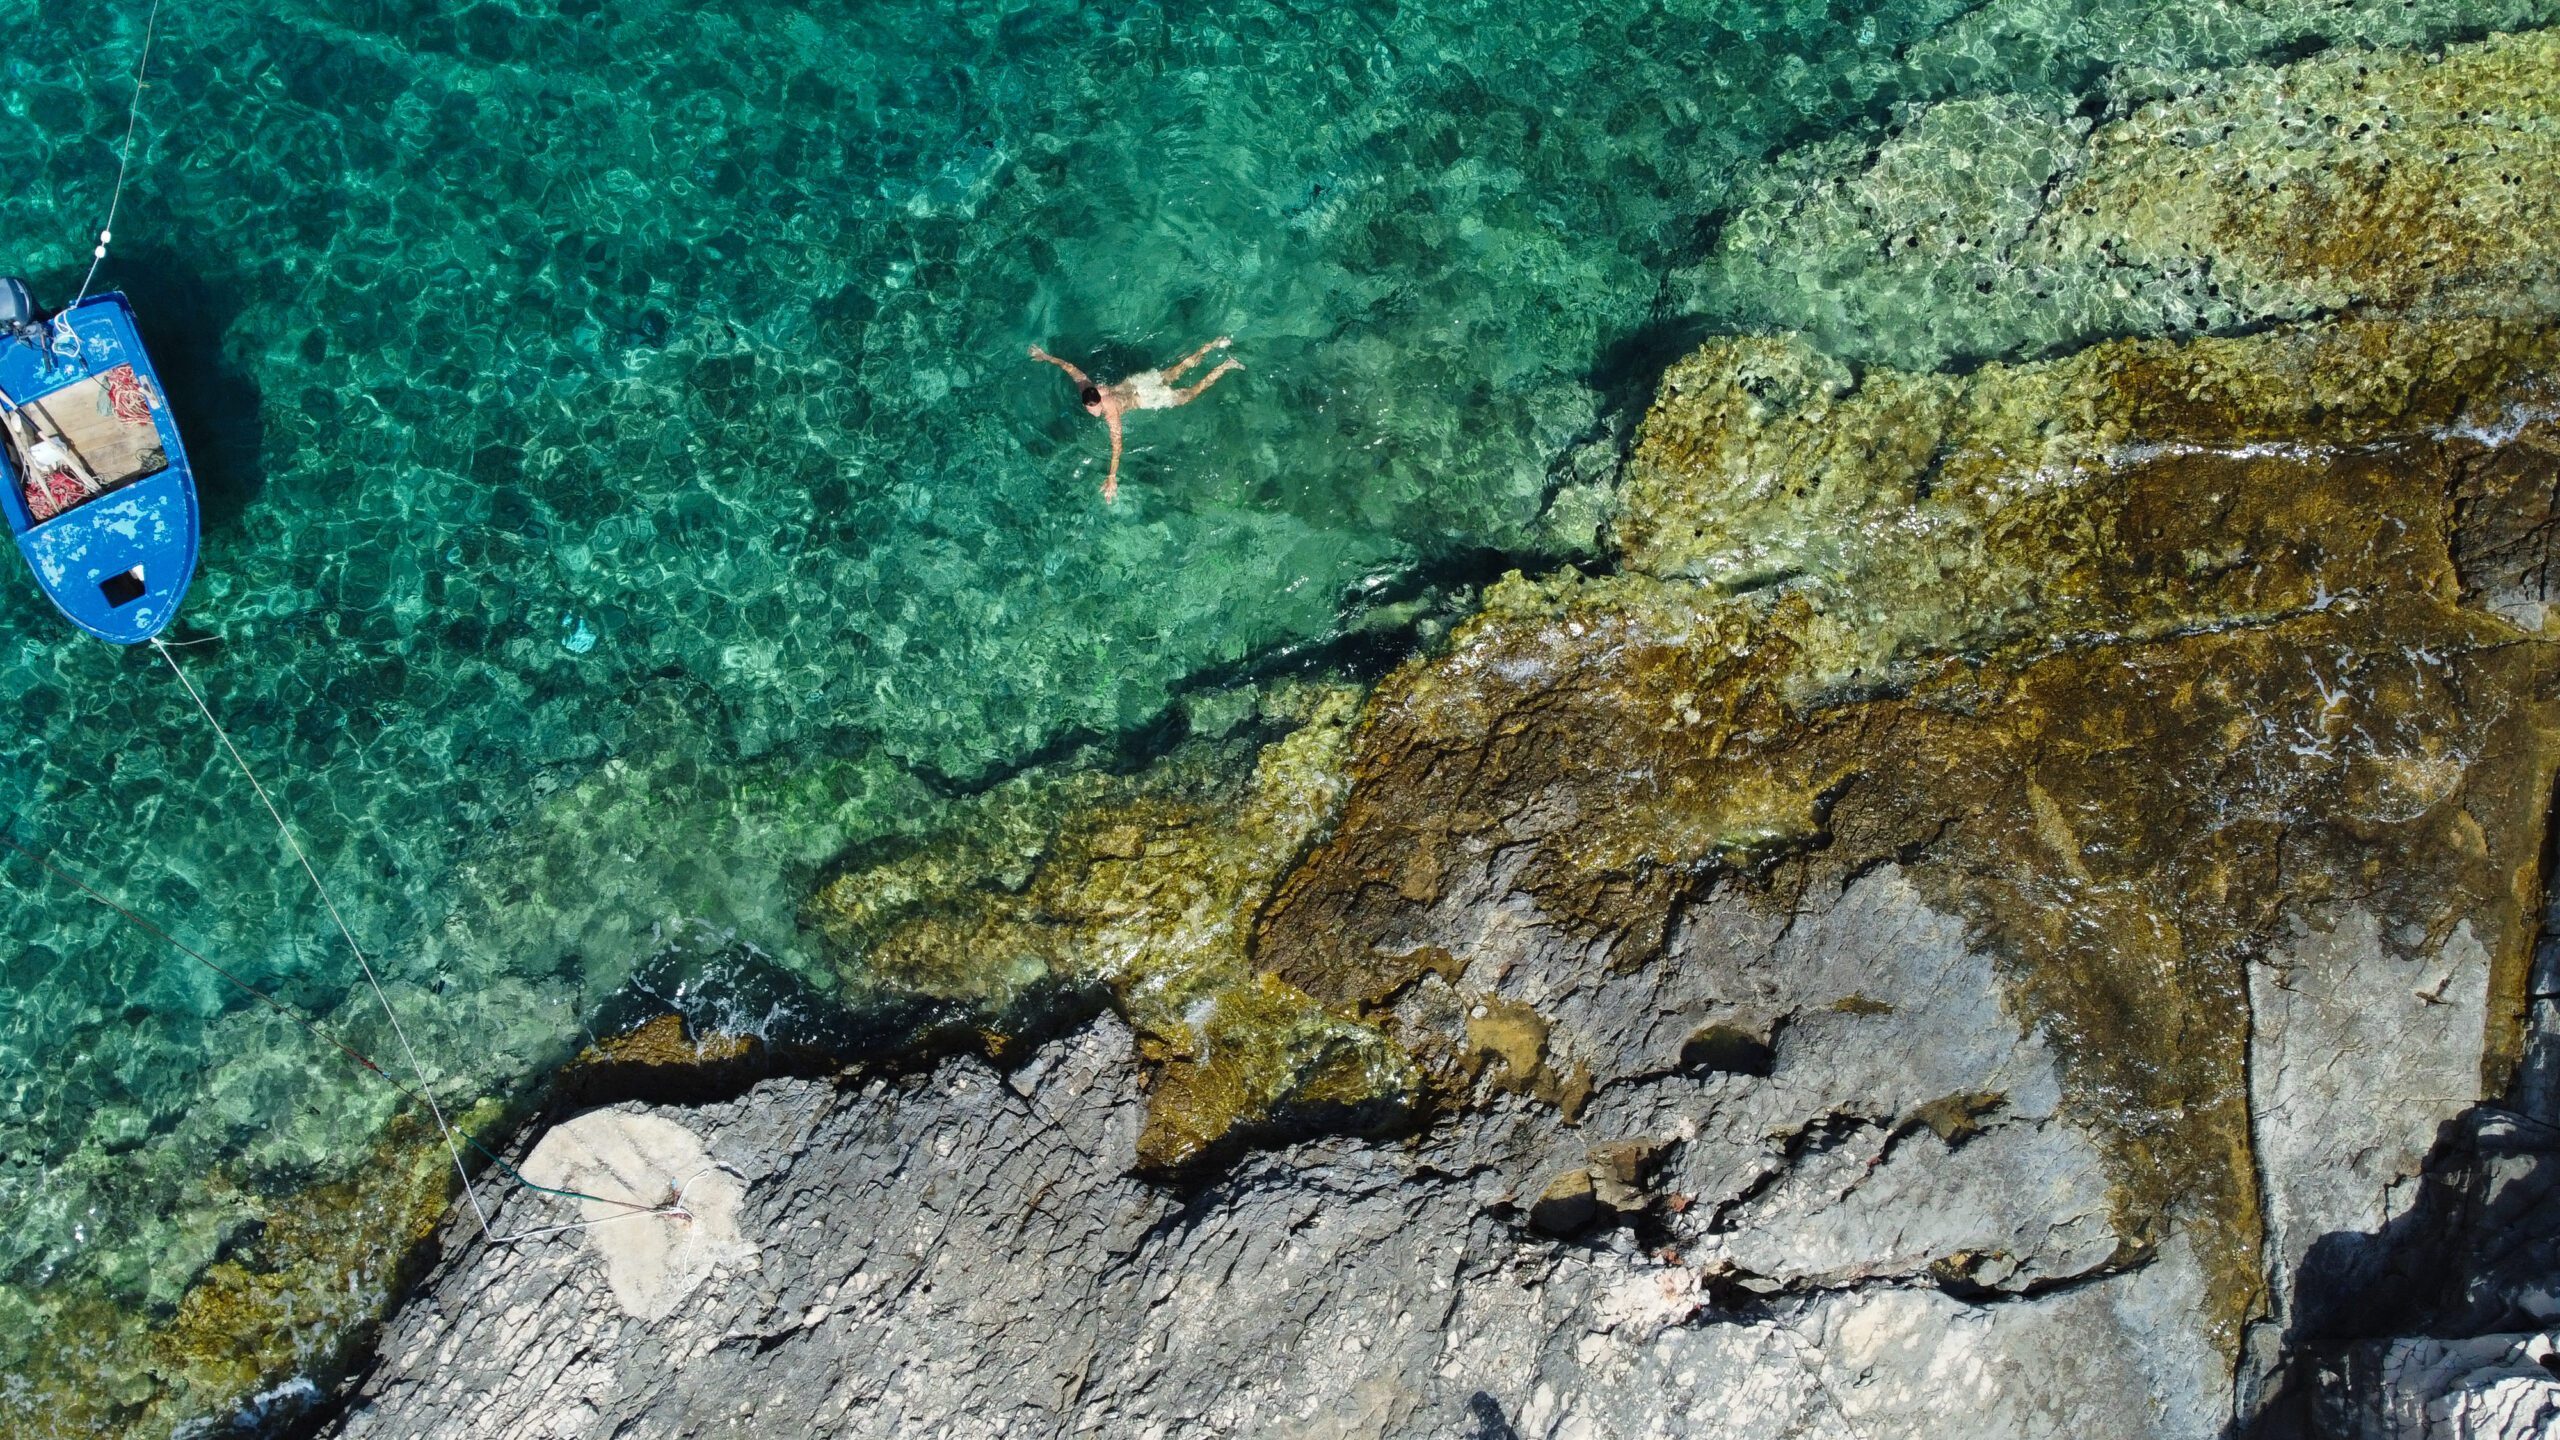 Vis island croatia drone footage